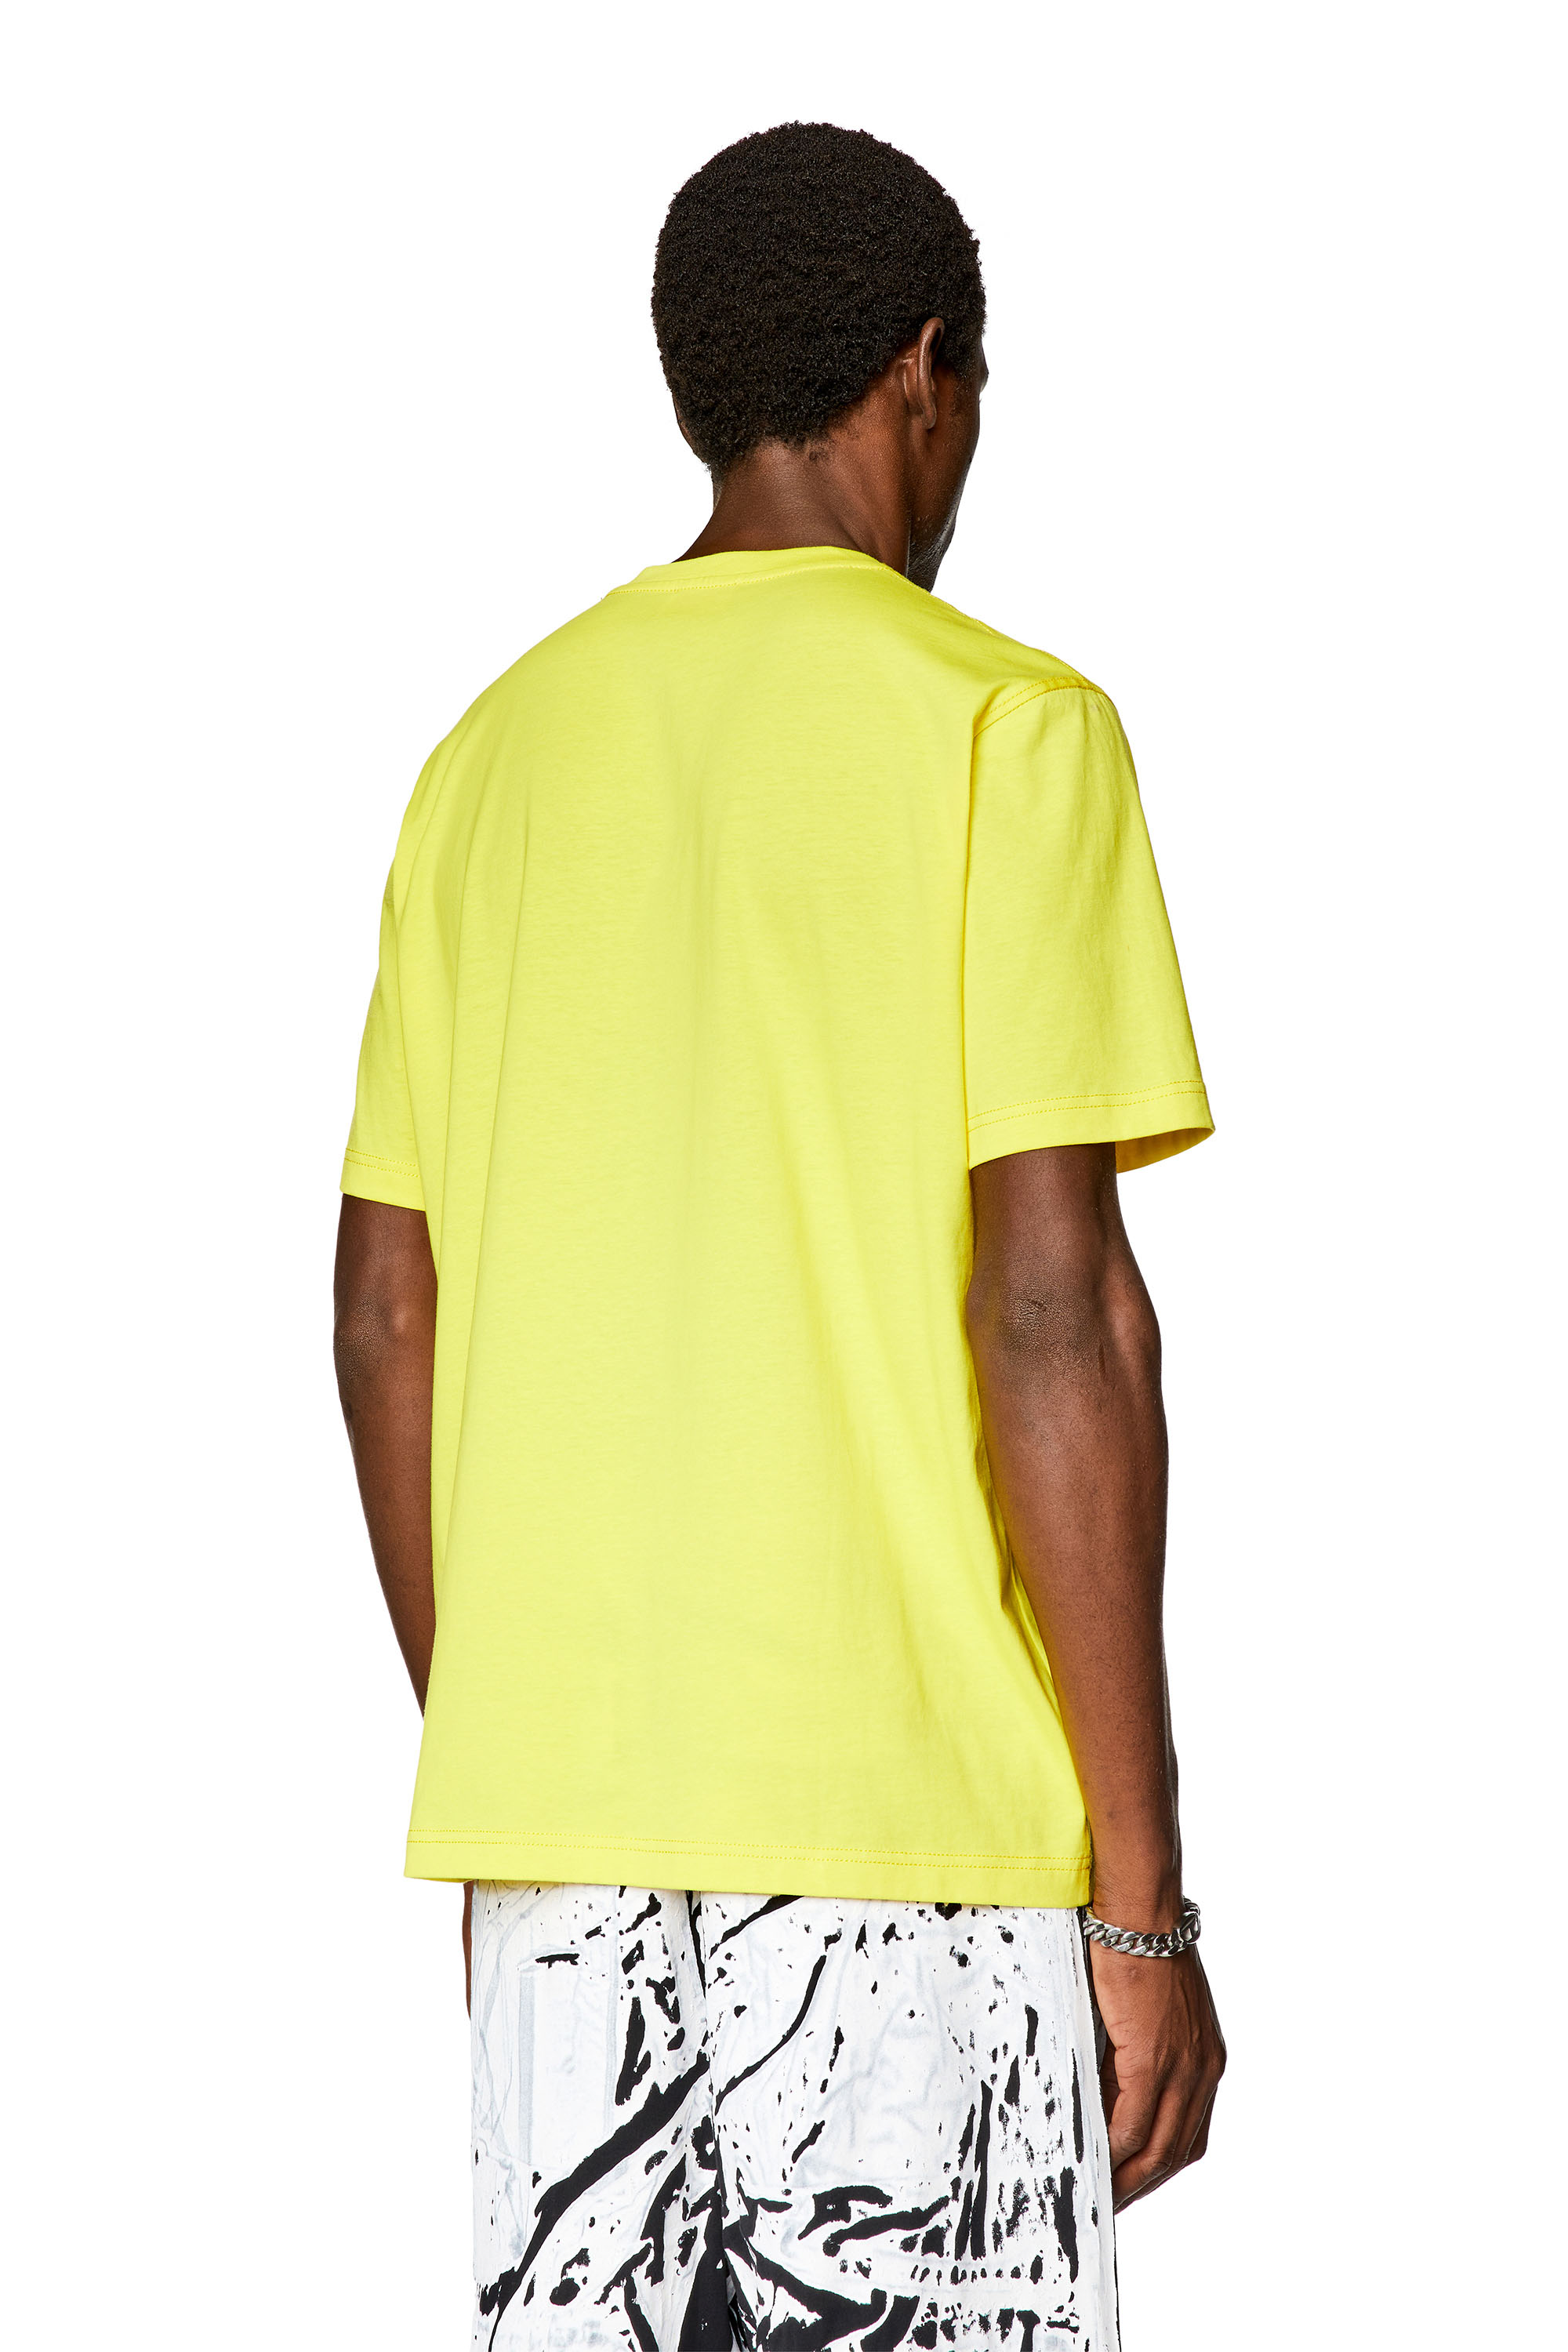 Diesel - T-JUST-N10, Man T-shirt with contrasting Diesel prints in Yellow - Image 4